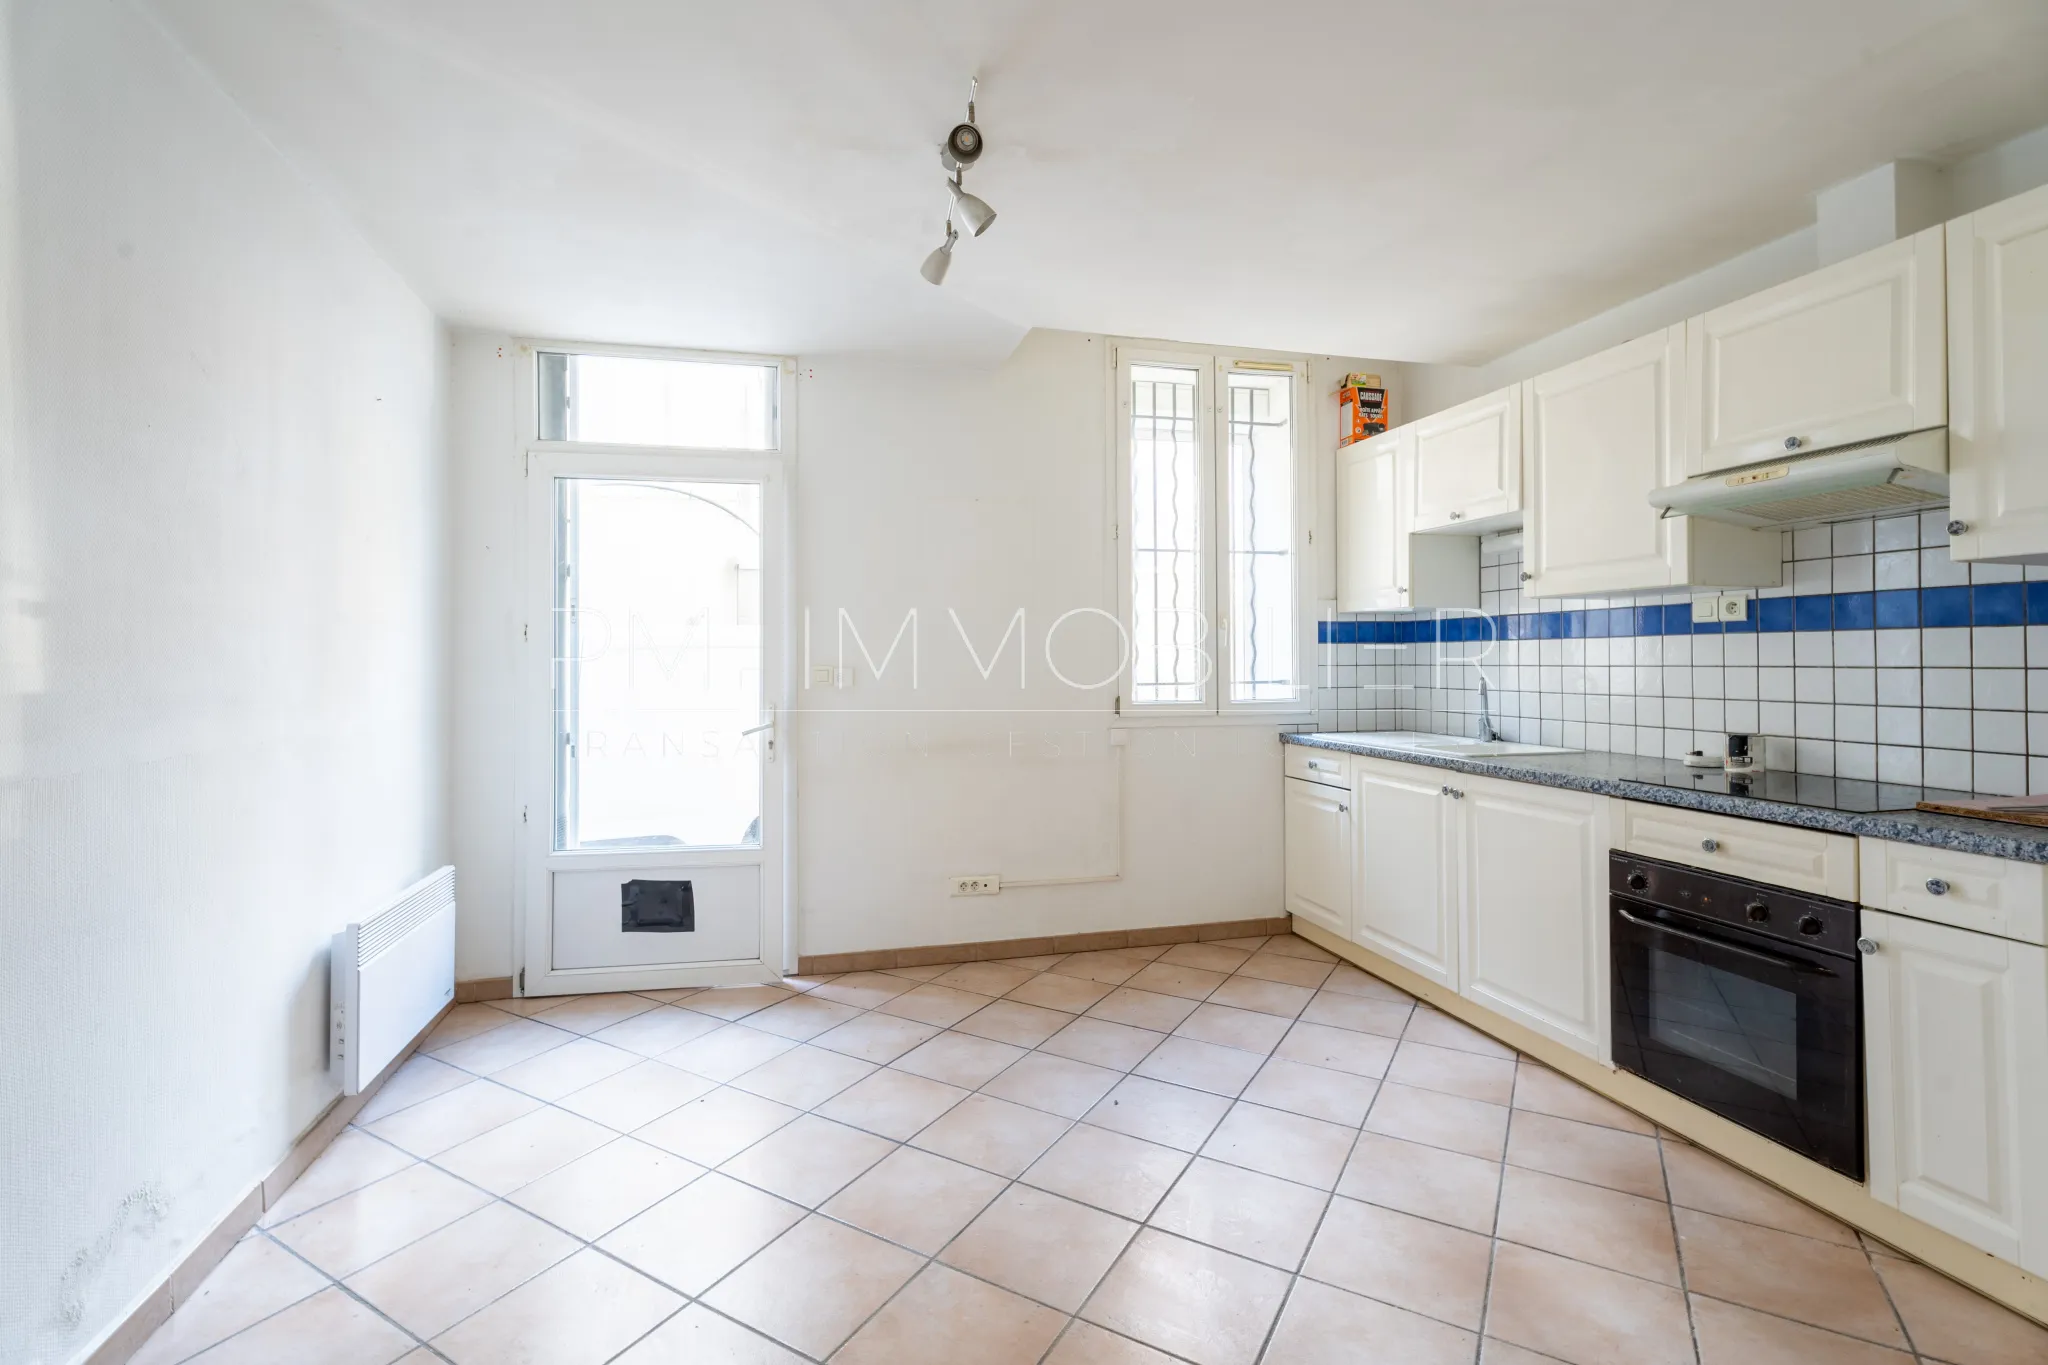 Apartment for Sale in Capelette, Marseille 10th - Type 2, 36 sqm 